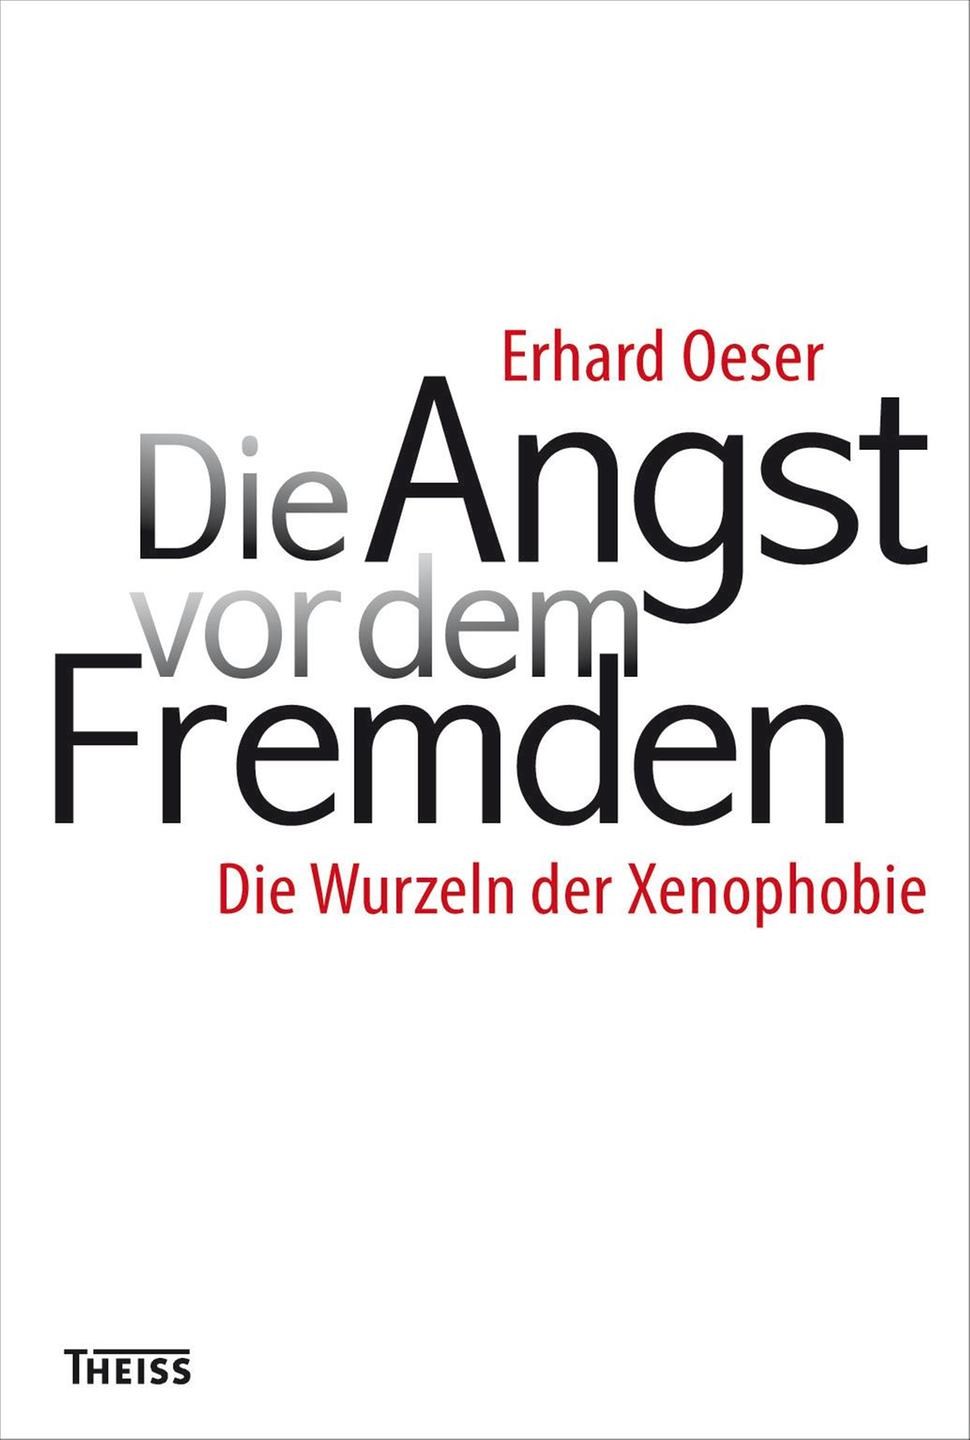 Erhard Oeser: "Die Angst vor dem Fremden"